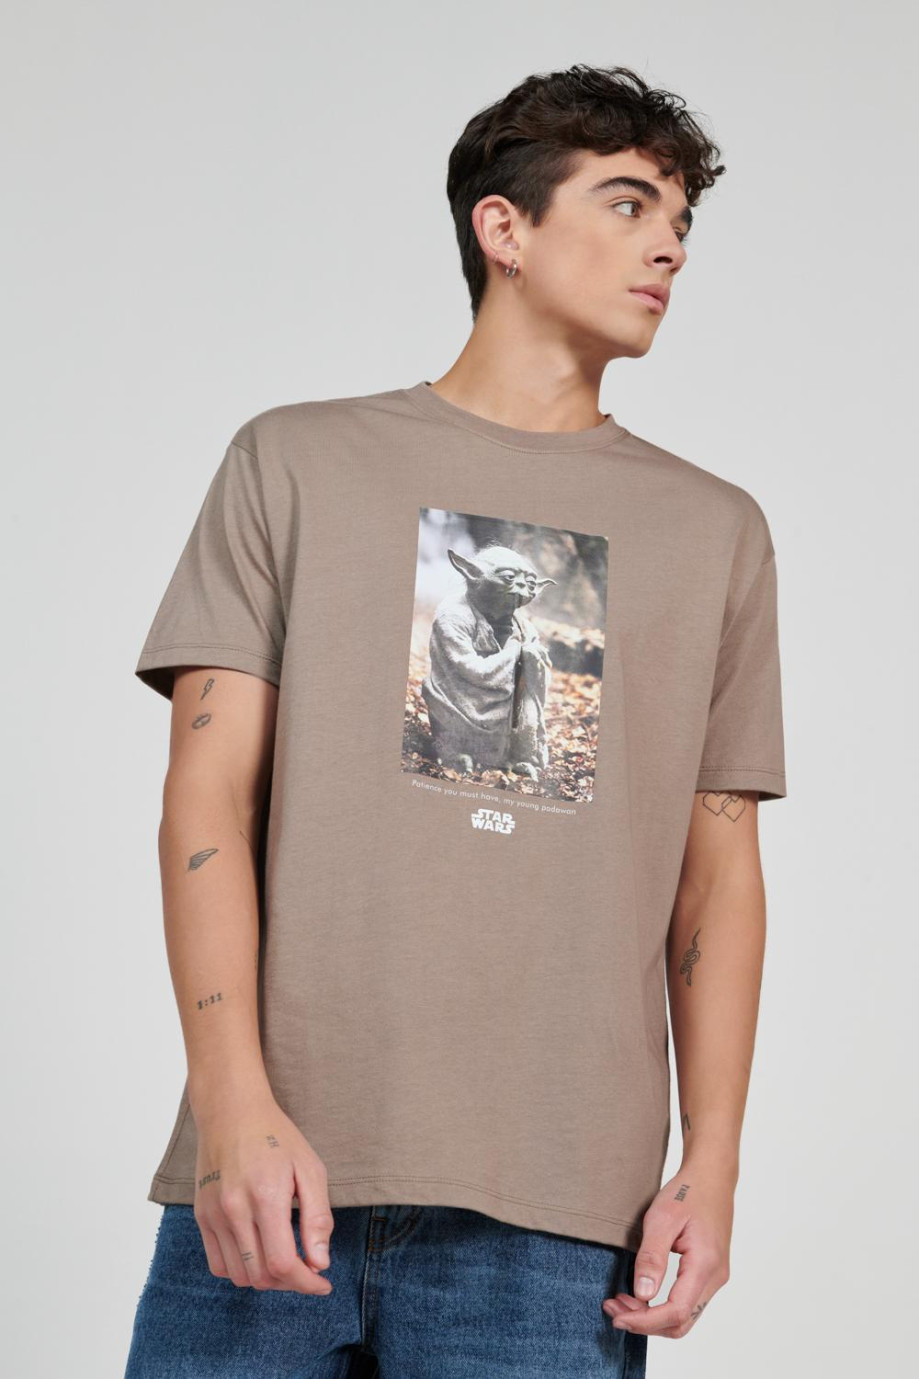 Camiseta kaki clara con manga corta y diseño de Star Wars